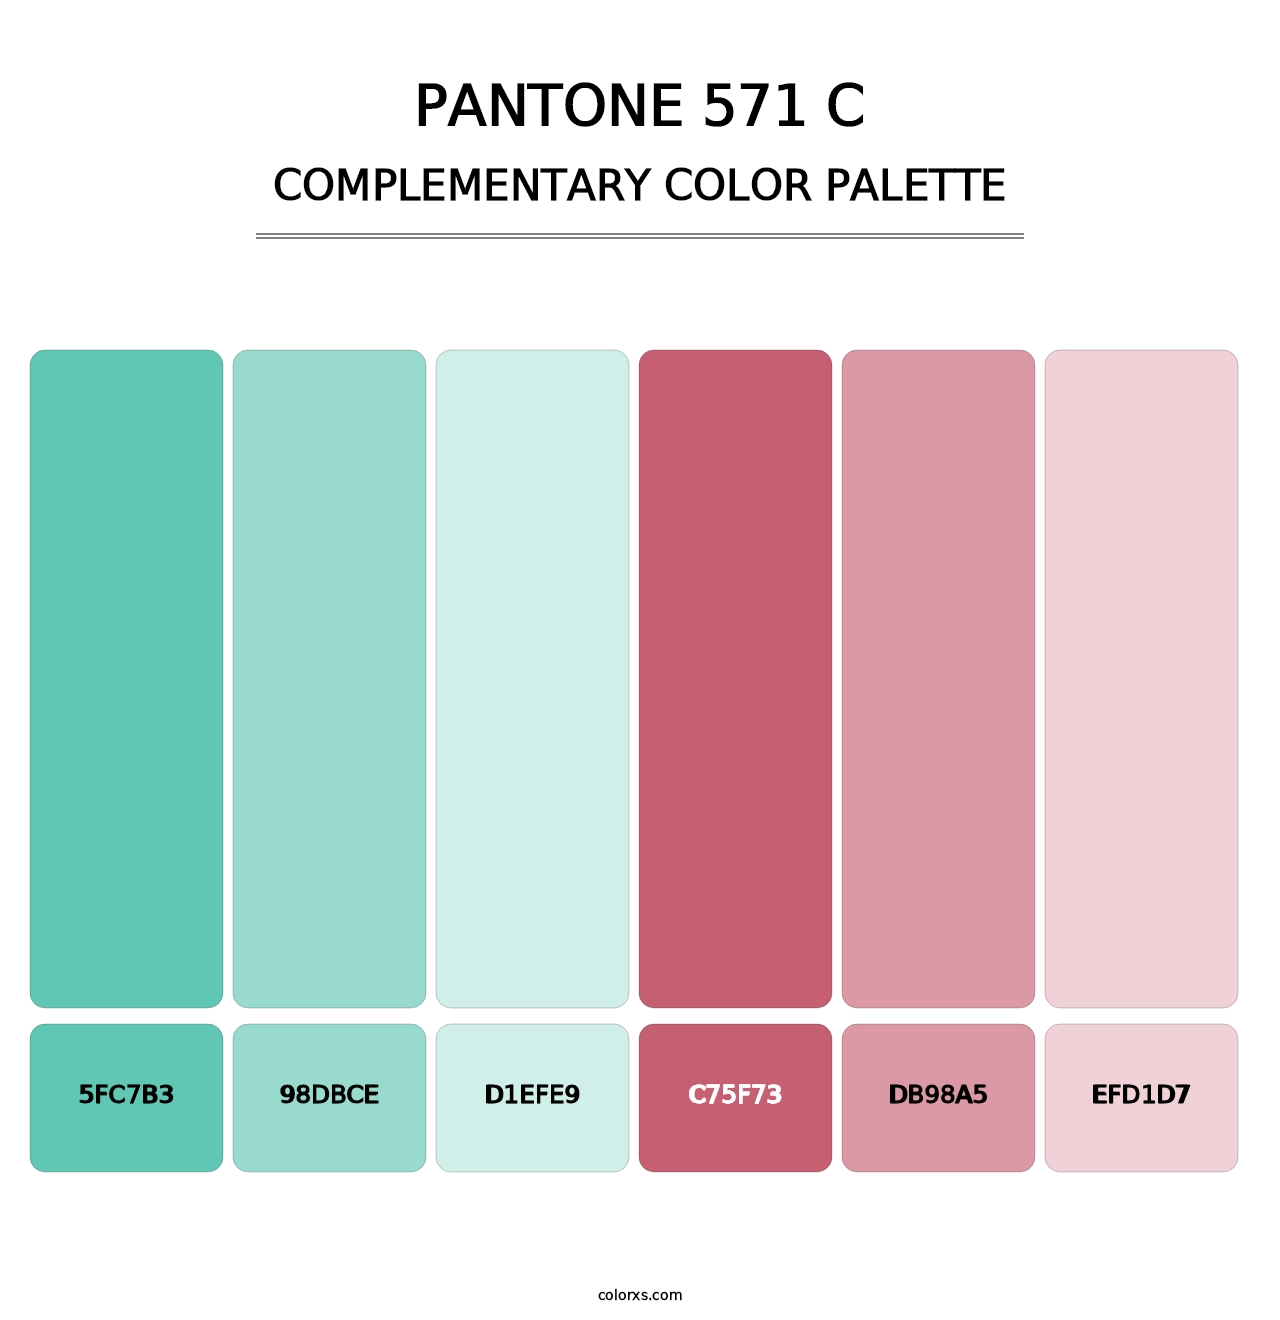 PANTONE 571 C - Complementary Color Palette